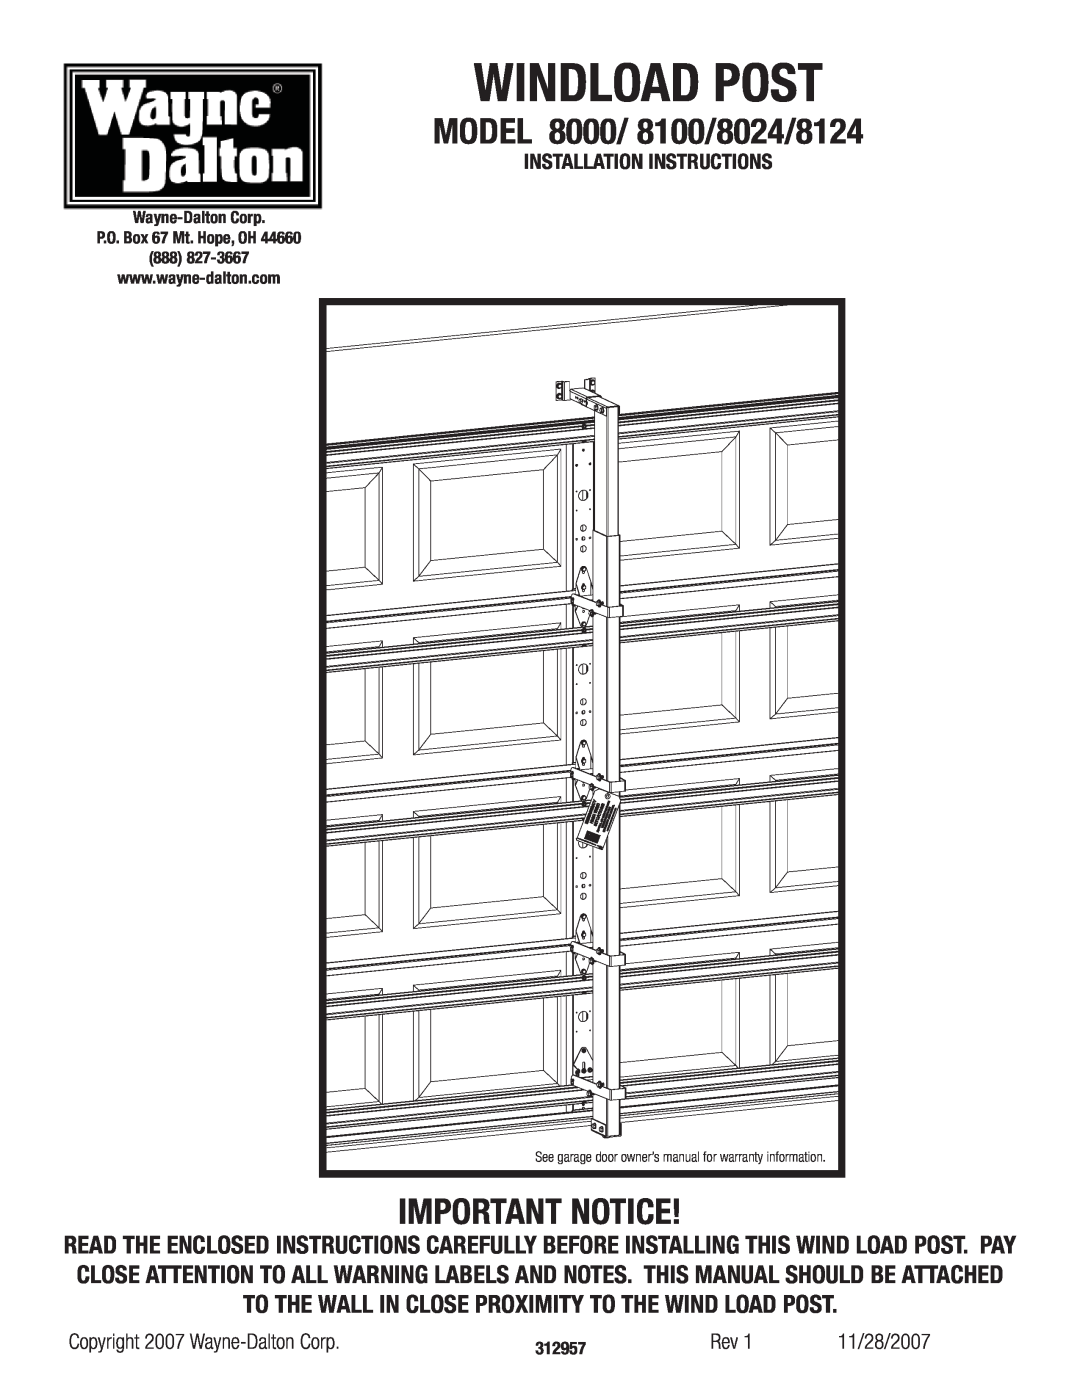 Wayne-Dalton installation instructions Windload Post, MODEL 8000/ 8100/8024/8124, Important Notice 